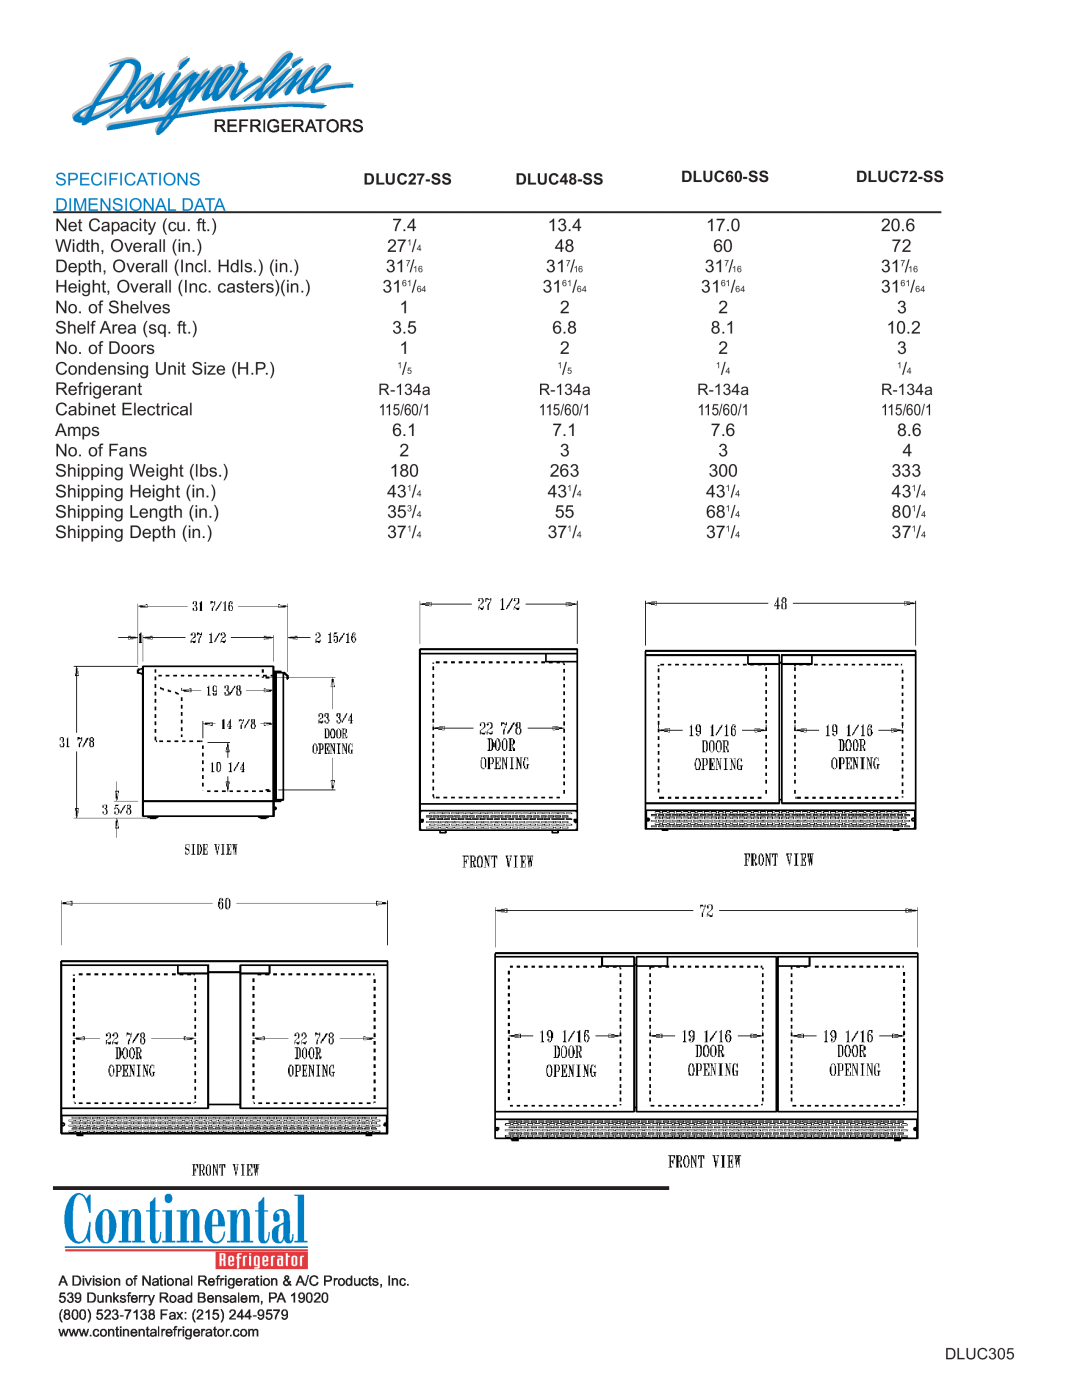 Continental Refrigerator DLUC48-SS, DLUC27-SS, DLUC72-SS, DLUC60-SS manual Refrigerators, Specifications, Dimensional Data 